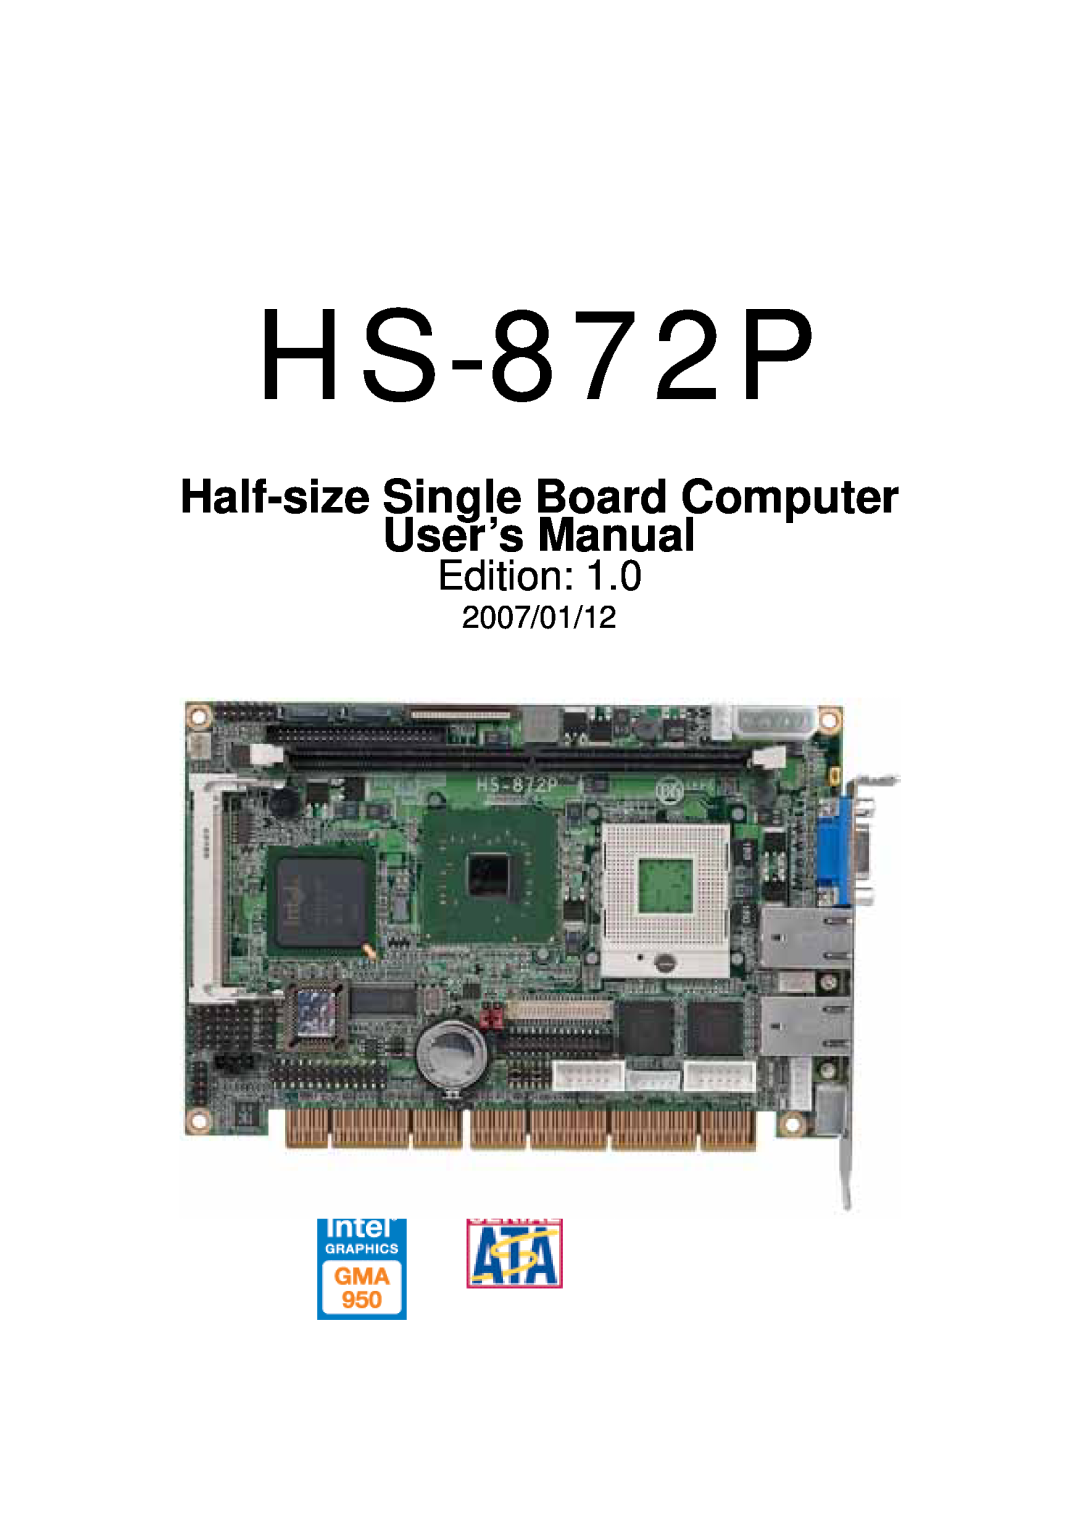 Intel half-size single board computer user manual 2007/01/12, HS-872P, Half-size Single Board Computer User’s Manual 